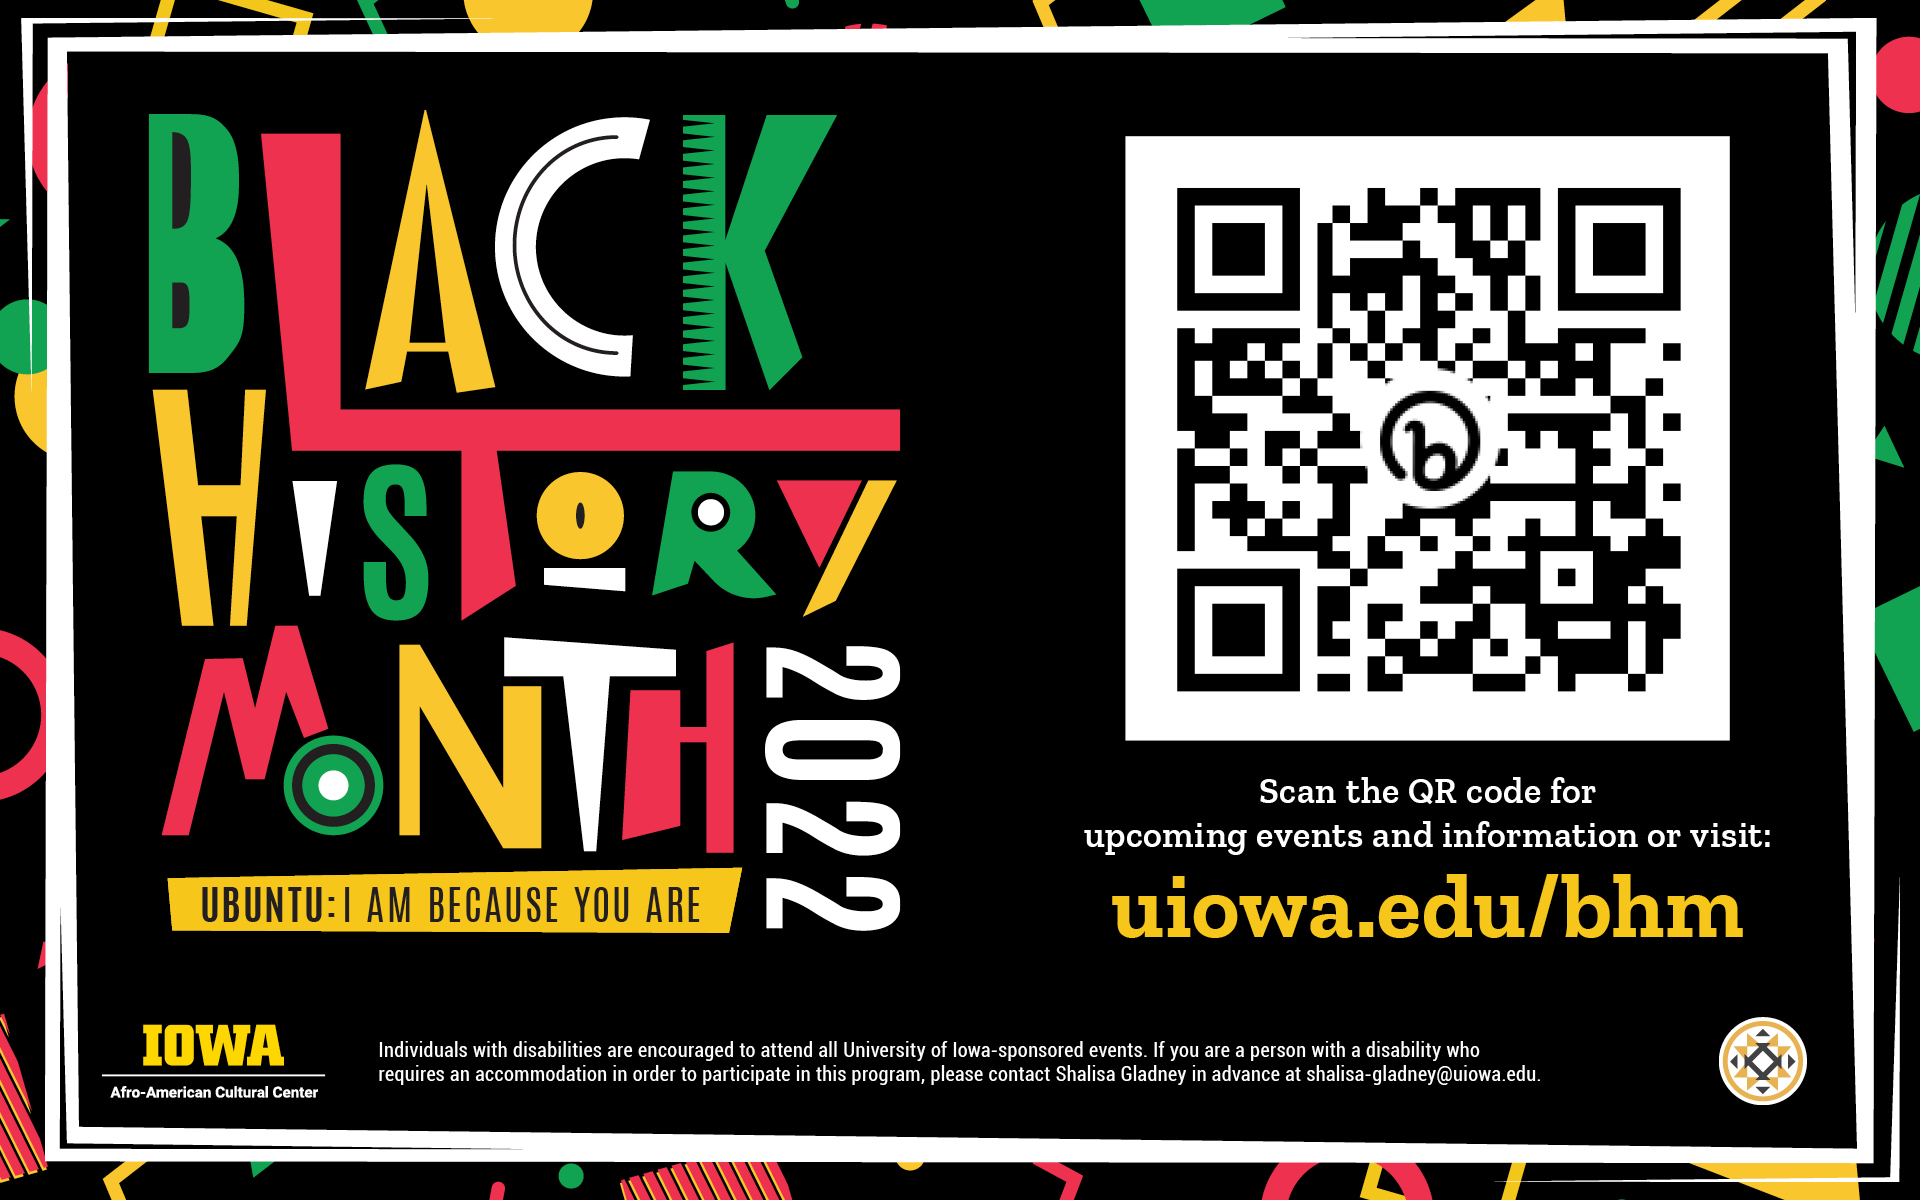 Black History Month visit uiowa.edu/bhm